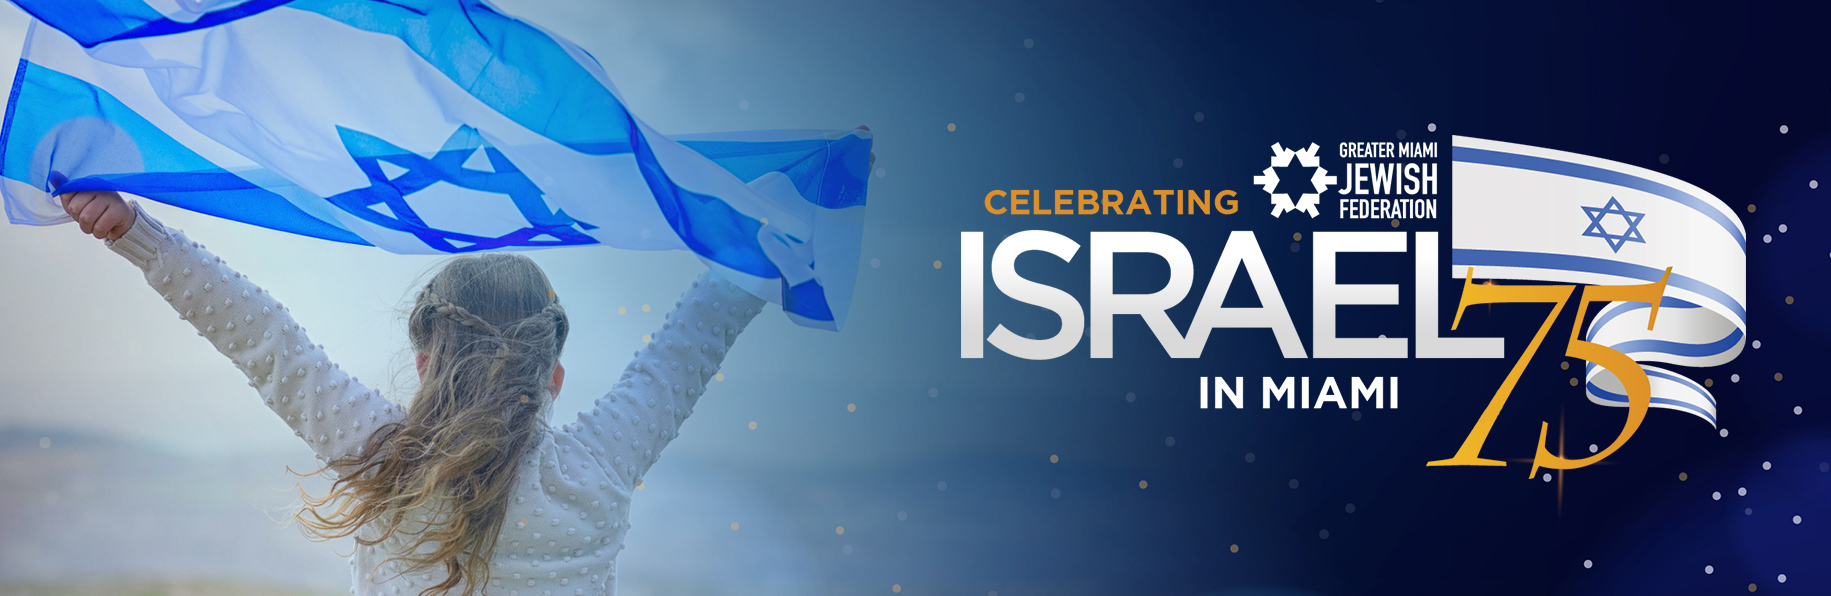 Israel 75 celebrations in Miami